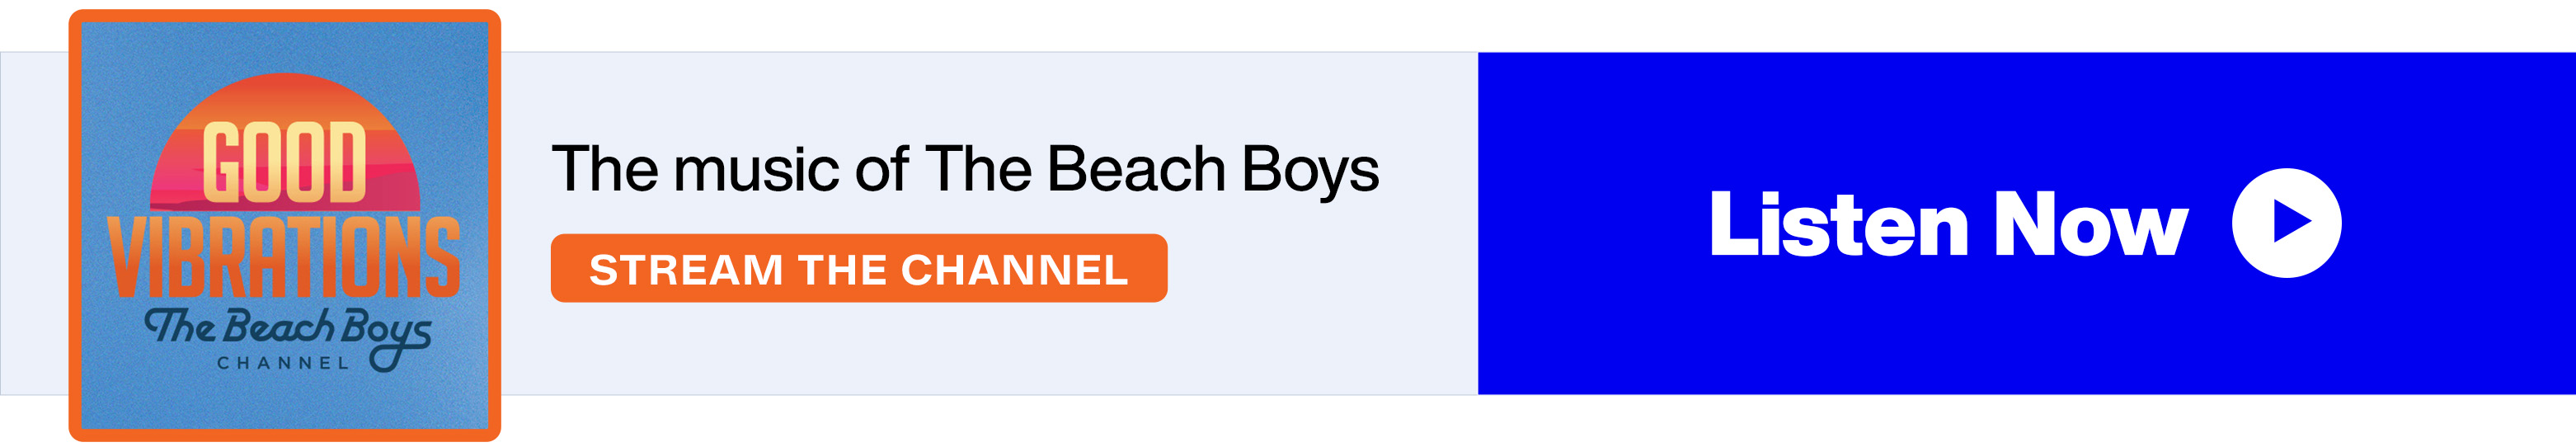 SiriusXM Good Vibrations The Beach Boys Channel - The music of The Beach Boys - Stream the Channel - Listen Now banner